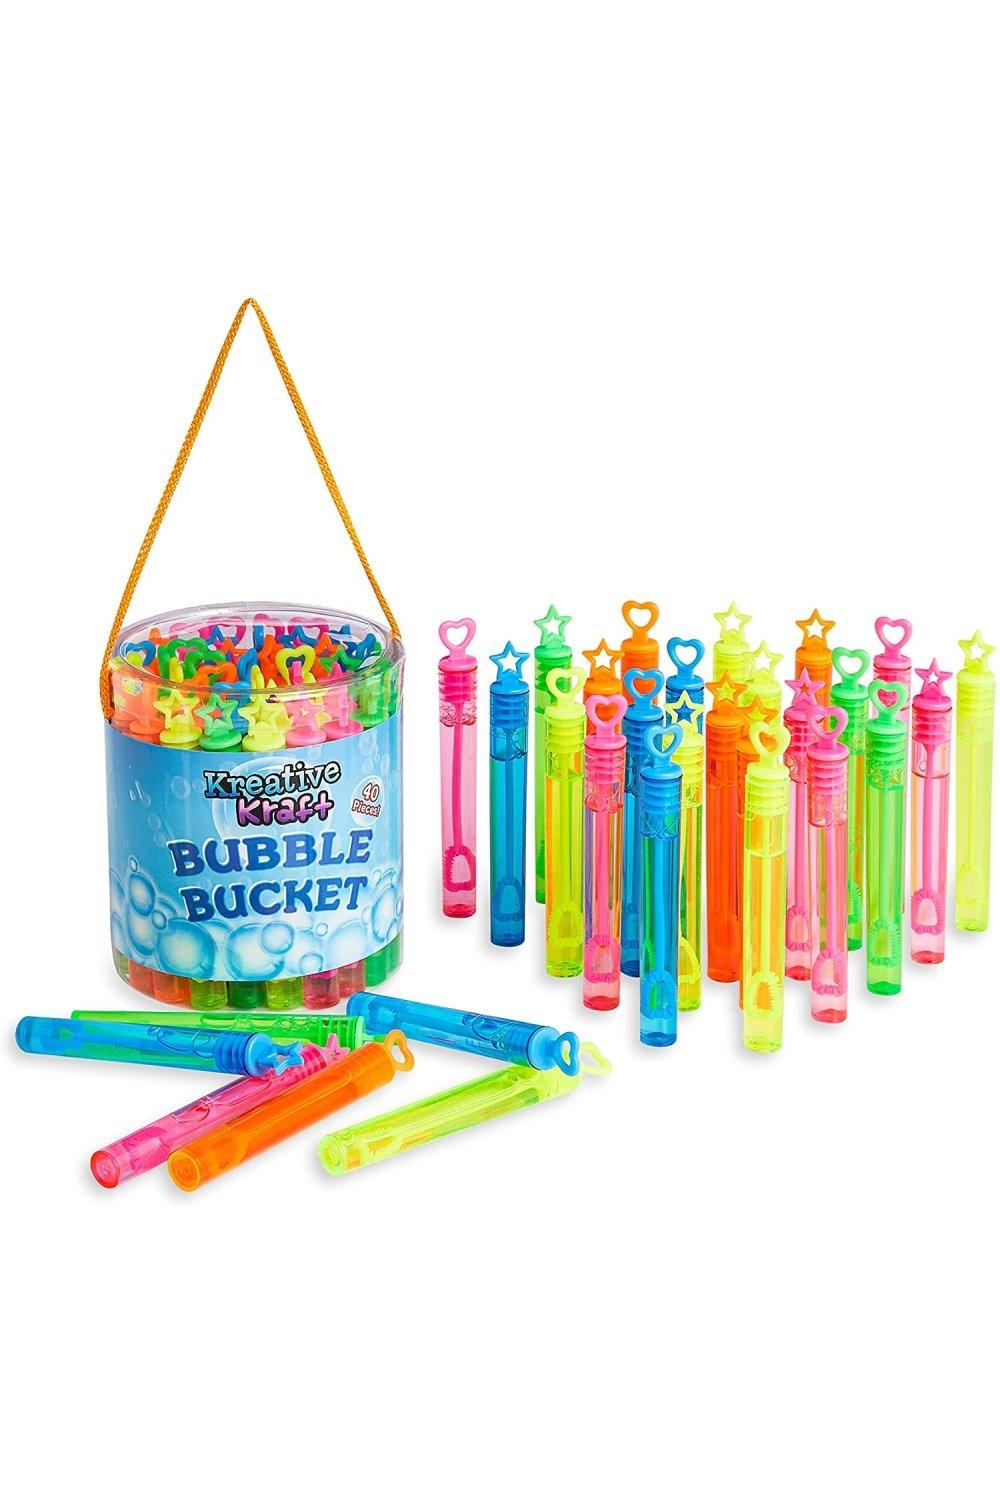 Bubble Bucket - 40 Bubble Sticks